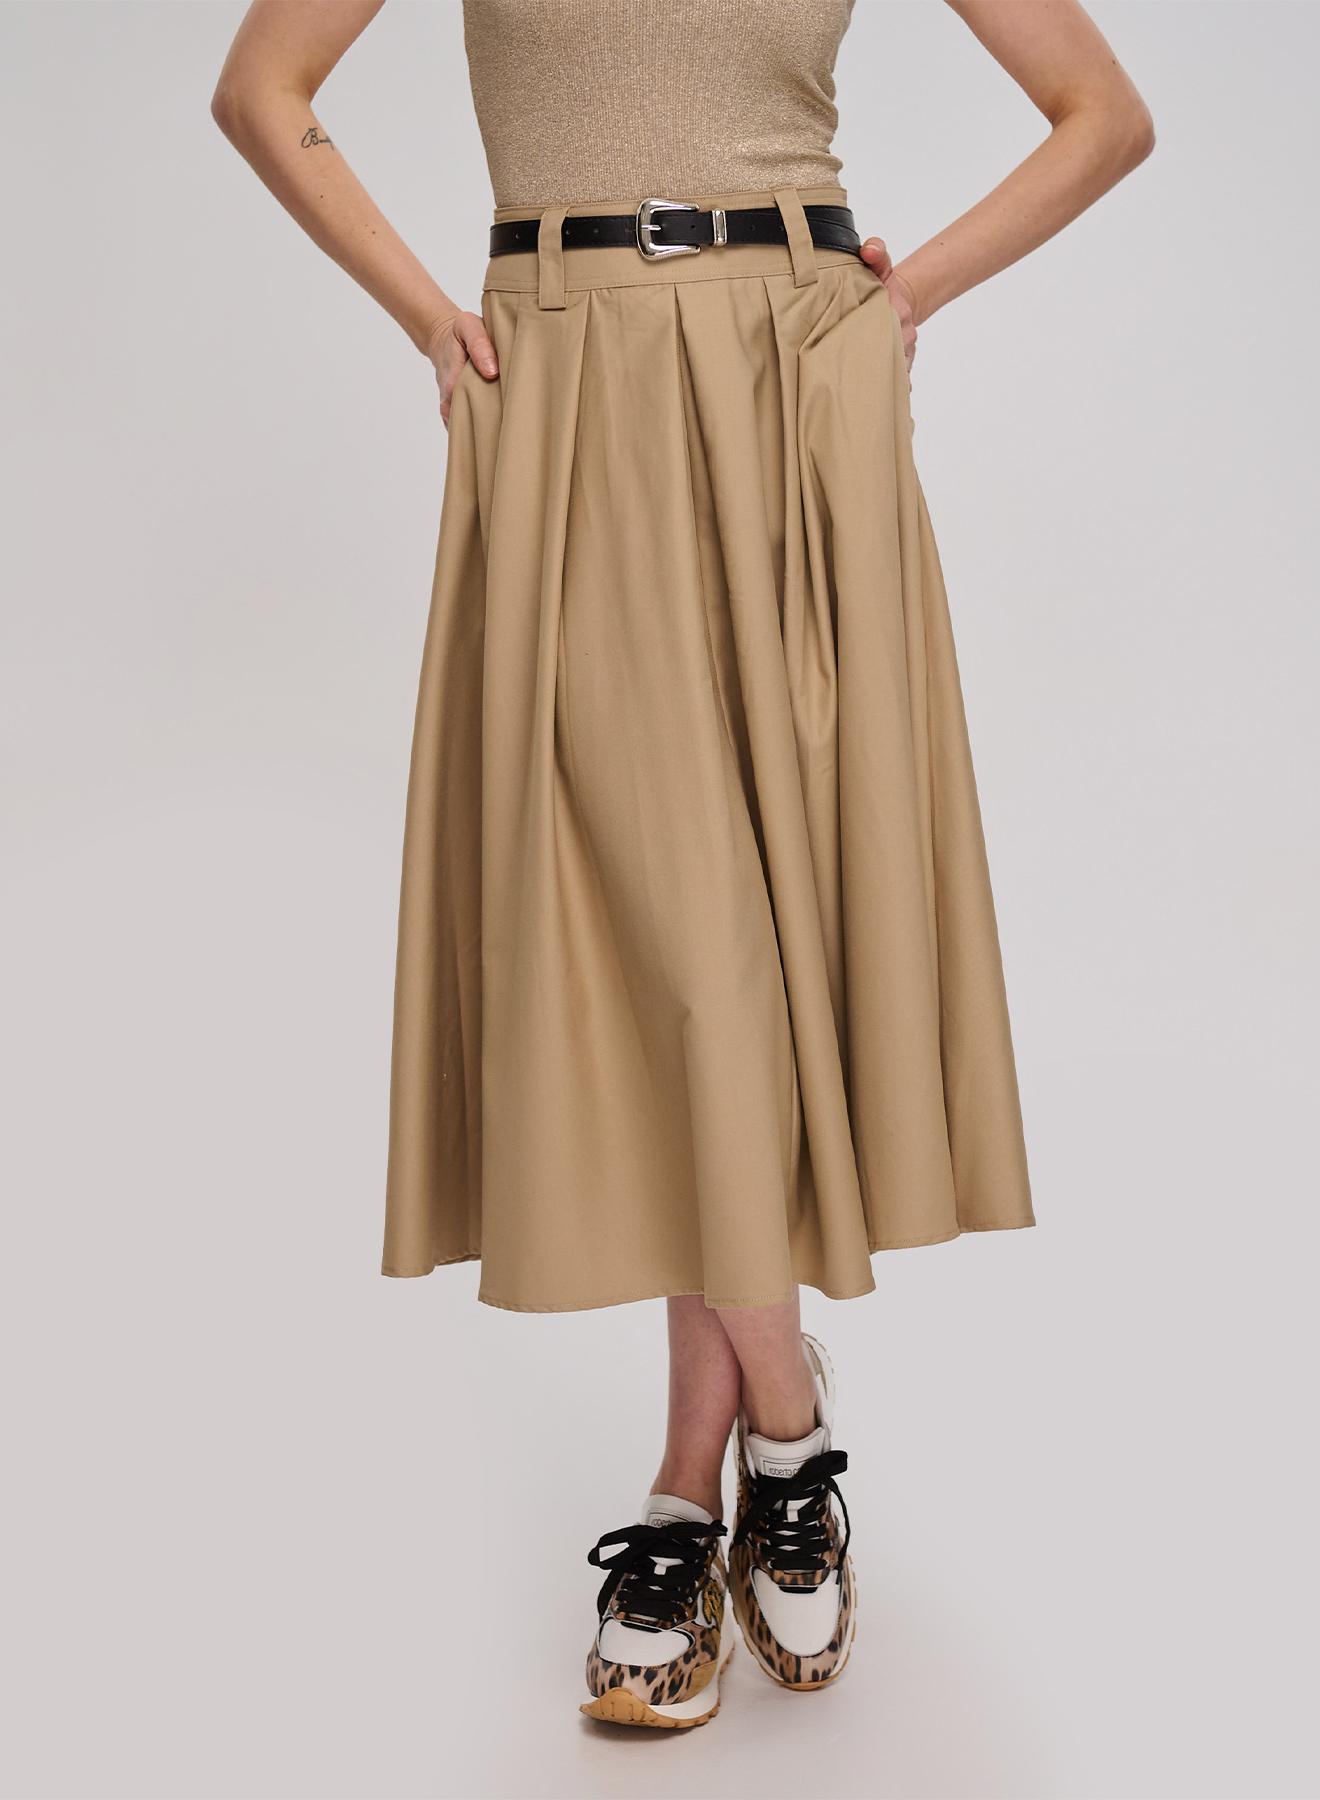 Camel pleated Skirt with Belt La Liberta - 4